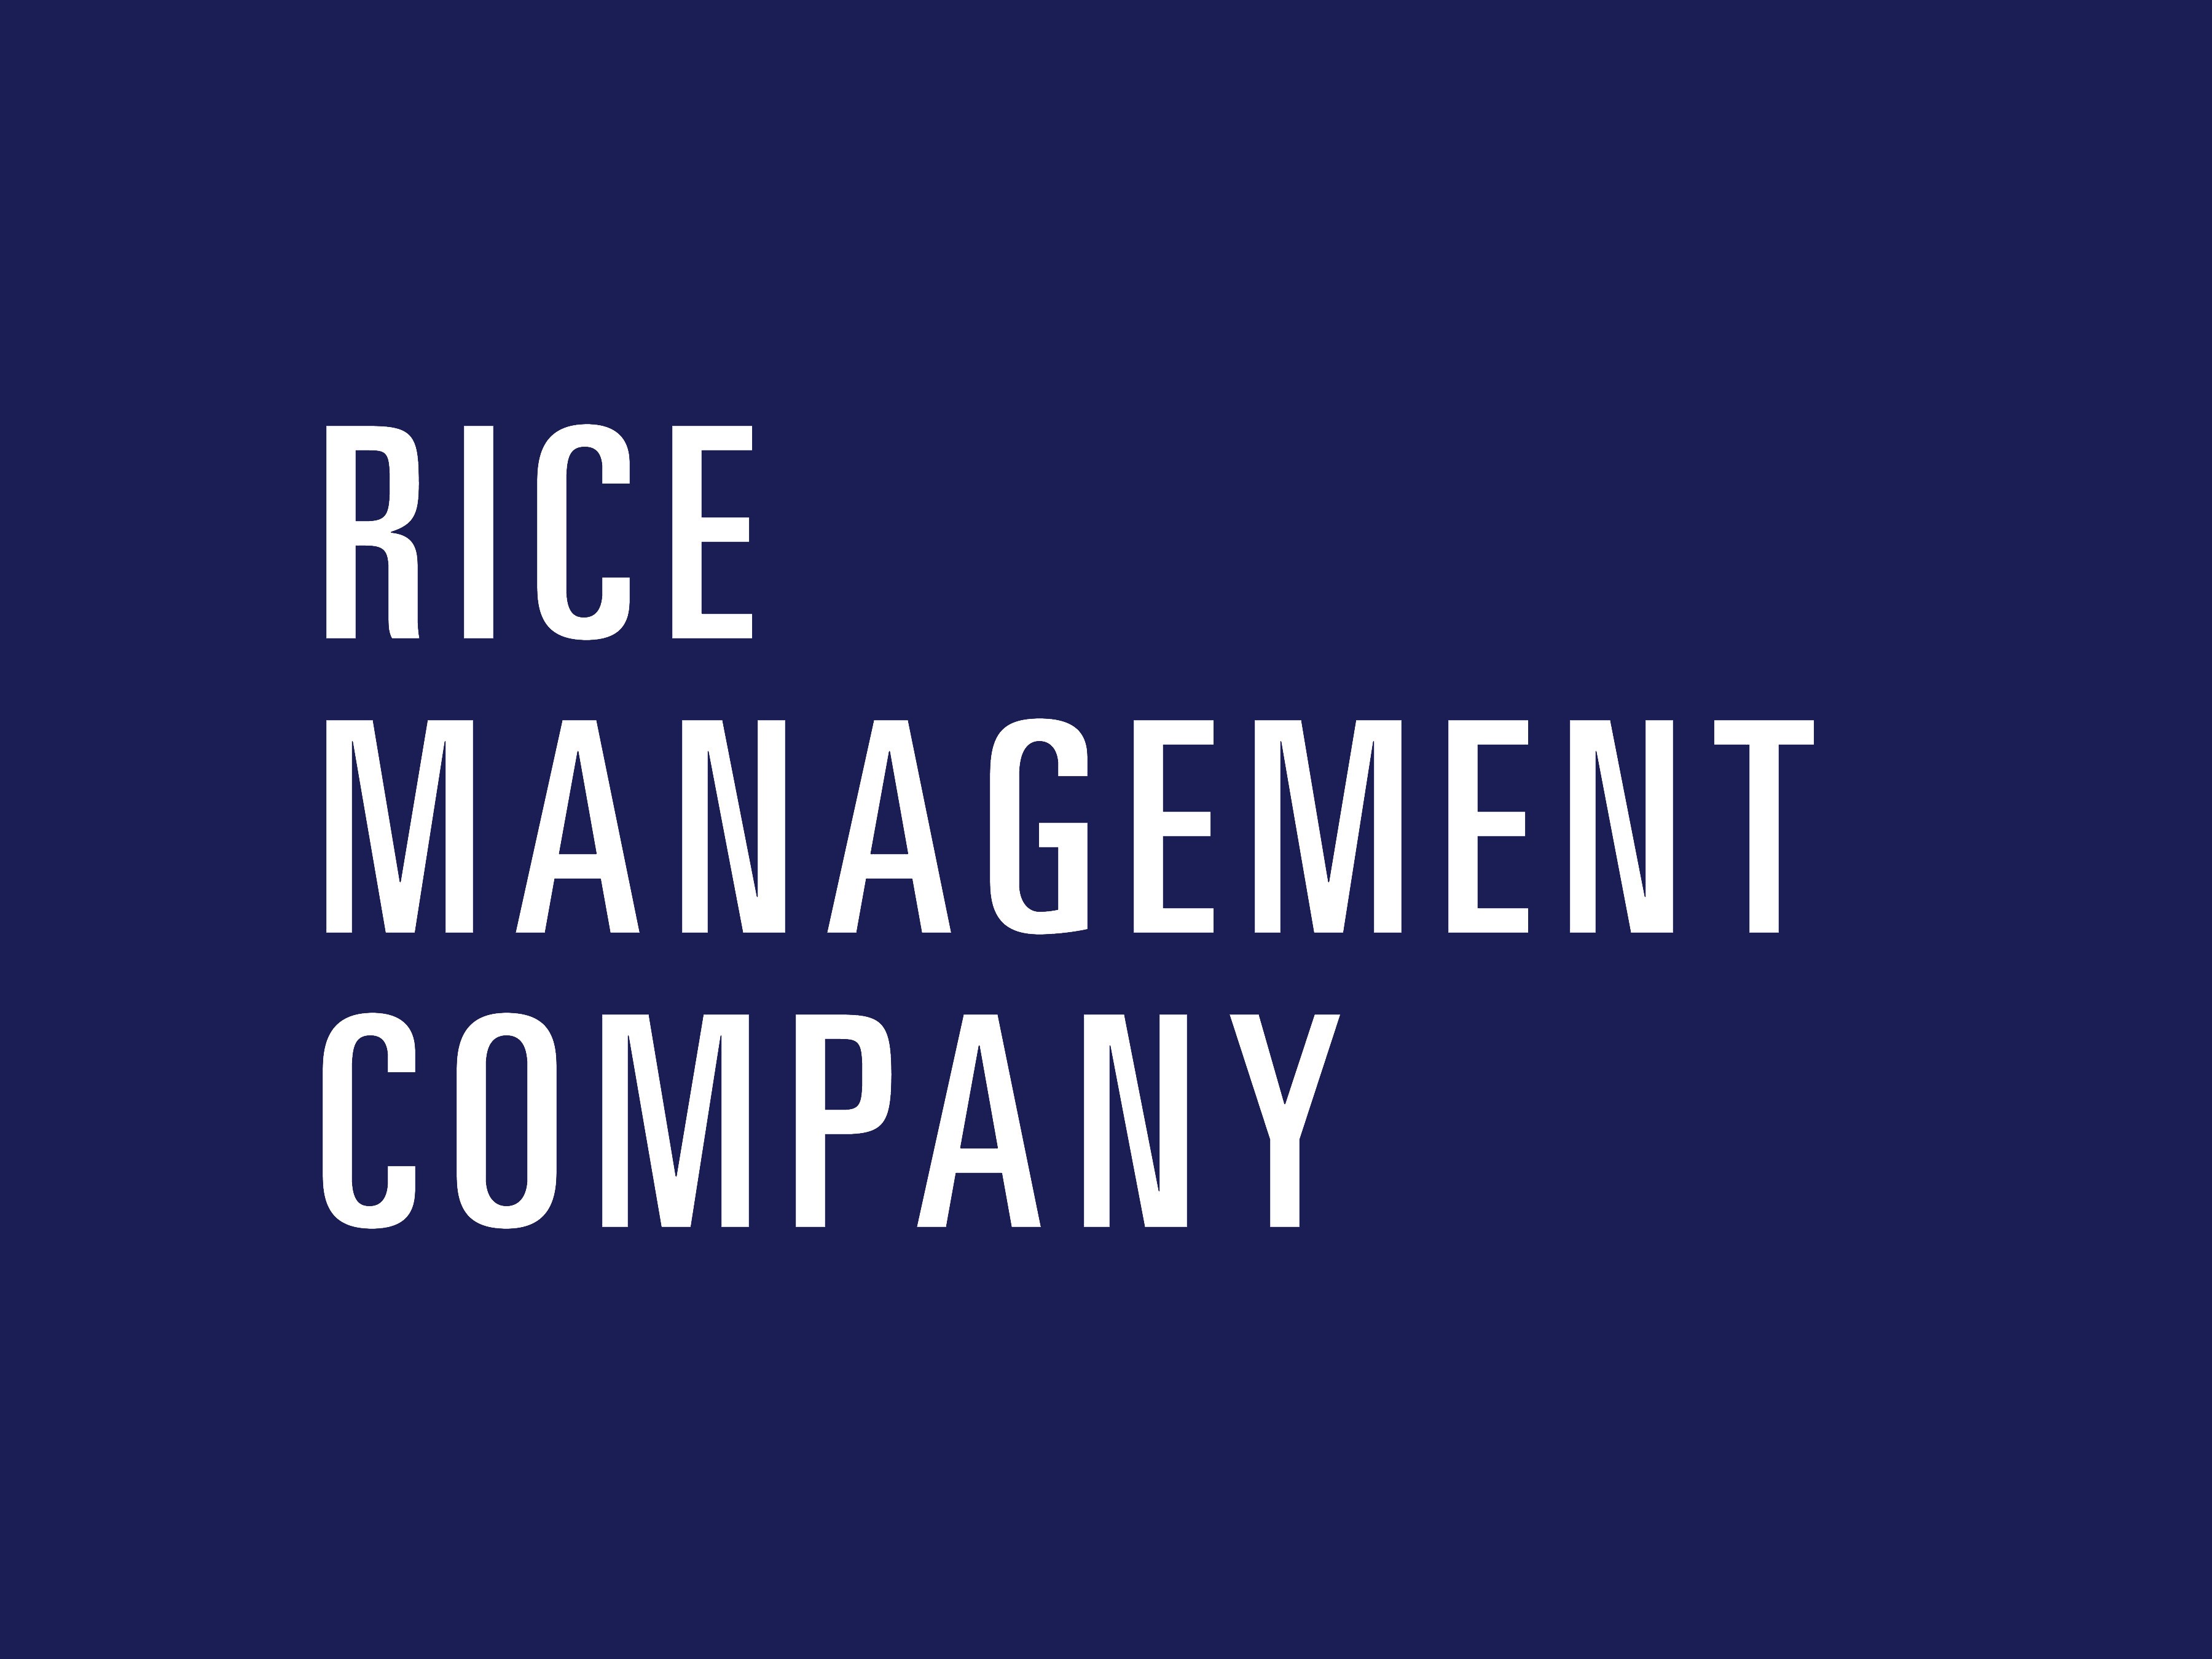 ”Rice"